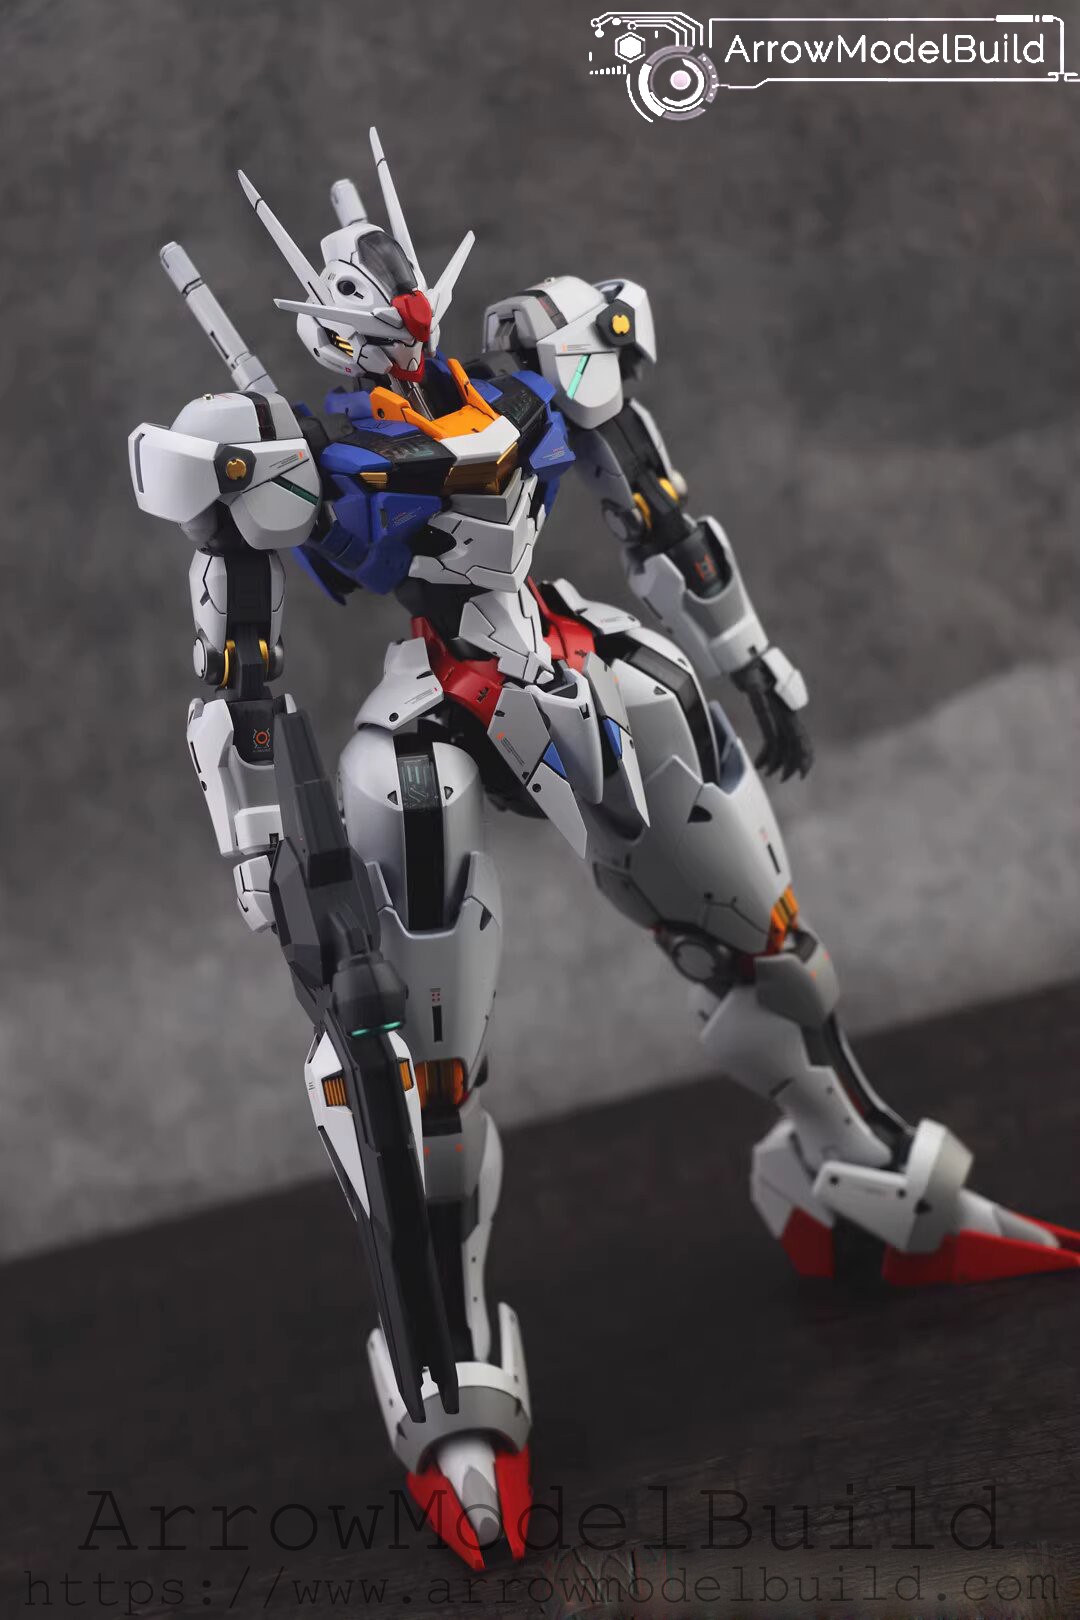 ArrowModelBuild - Figure and Robot, Gundam, Military, Vehicle, Arrow, Model  Build. ArrowModelBuild Gundam Aerial Built & Painted FM 1/100 Model Kit